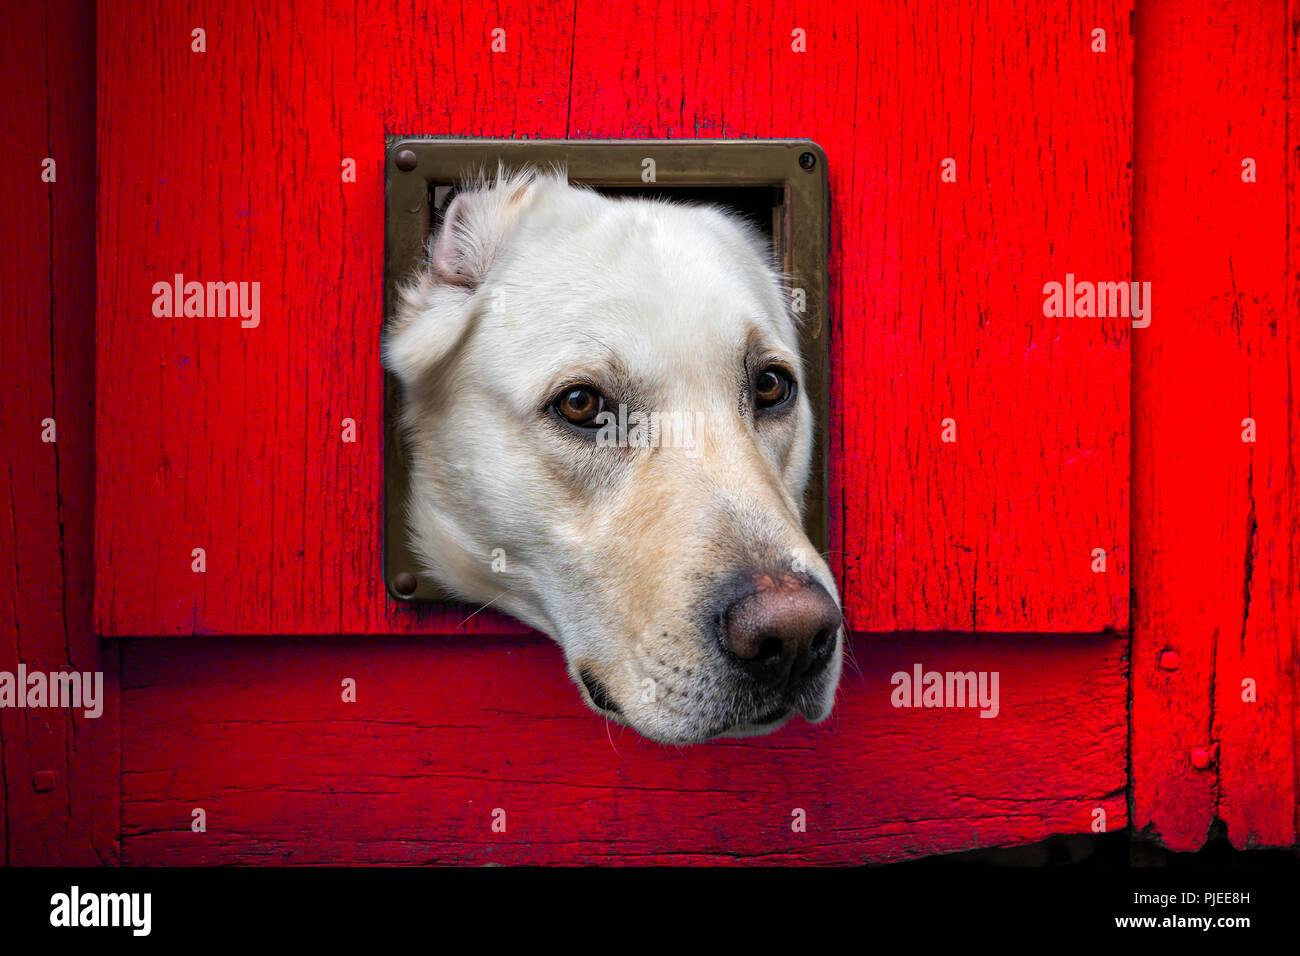 Dogs head through cat flap in red wooden door - landscape format Stock Photo